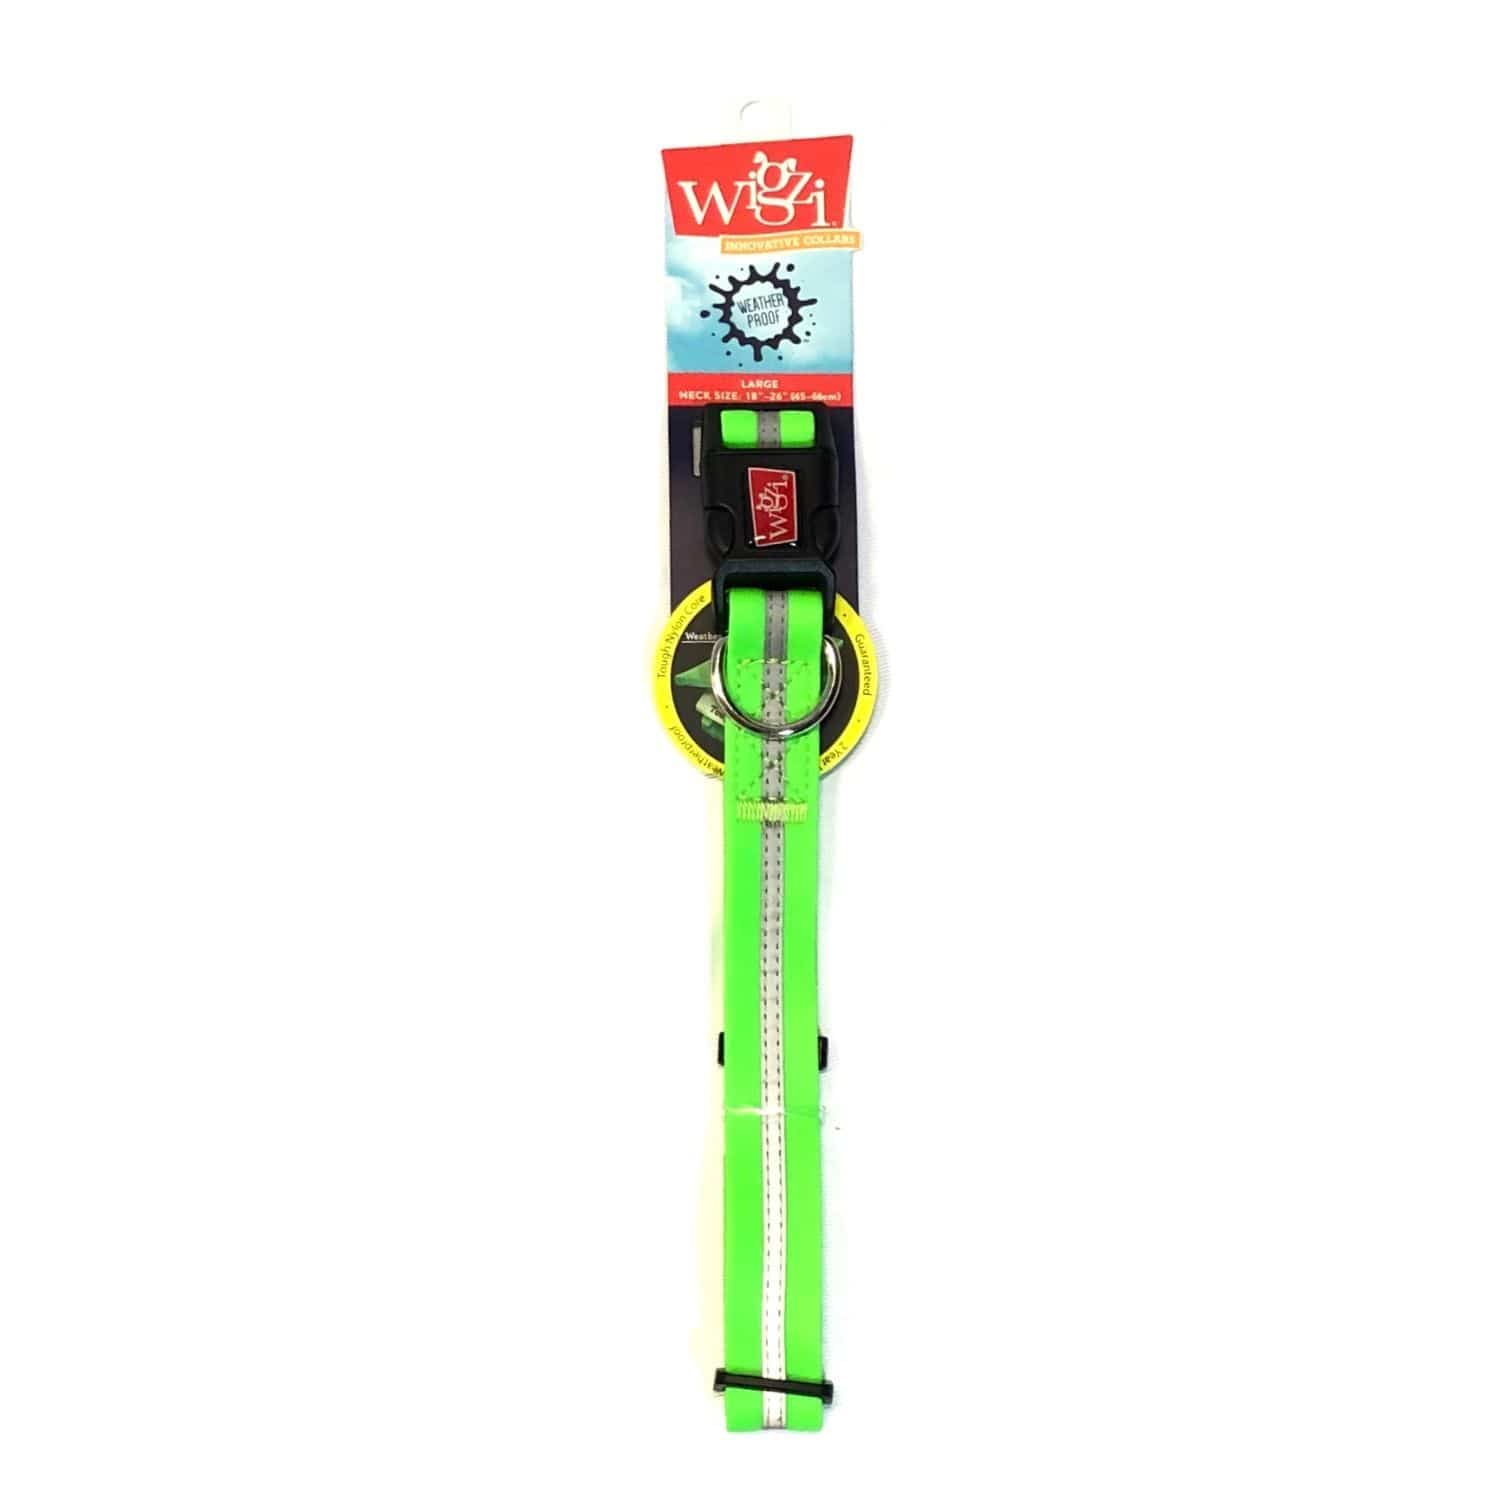 Wigzi Gifts & Novelty : Pets Wigzi Reflective Weatherproof Adjustable Collar Neon Grn Sm